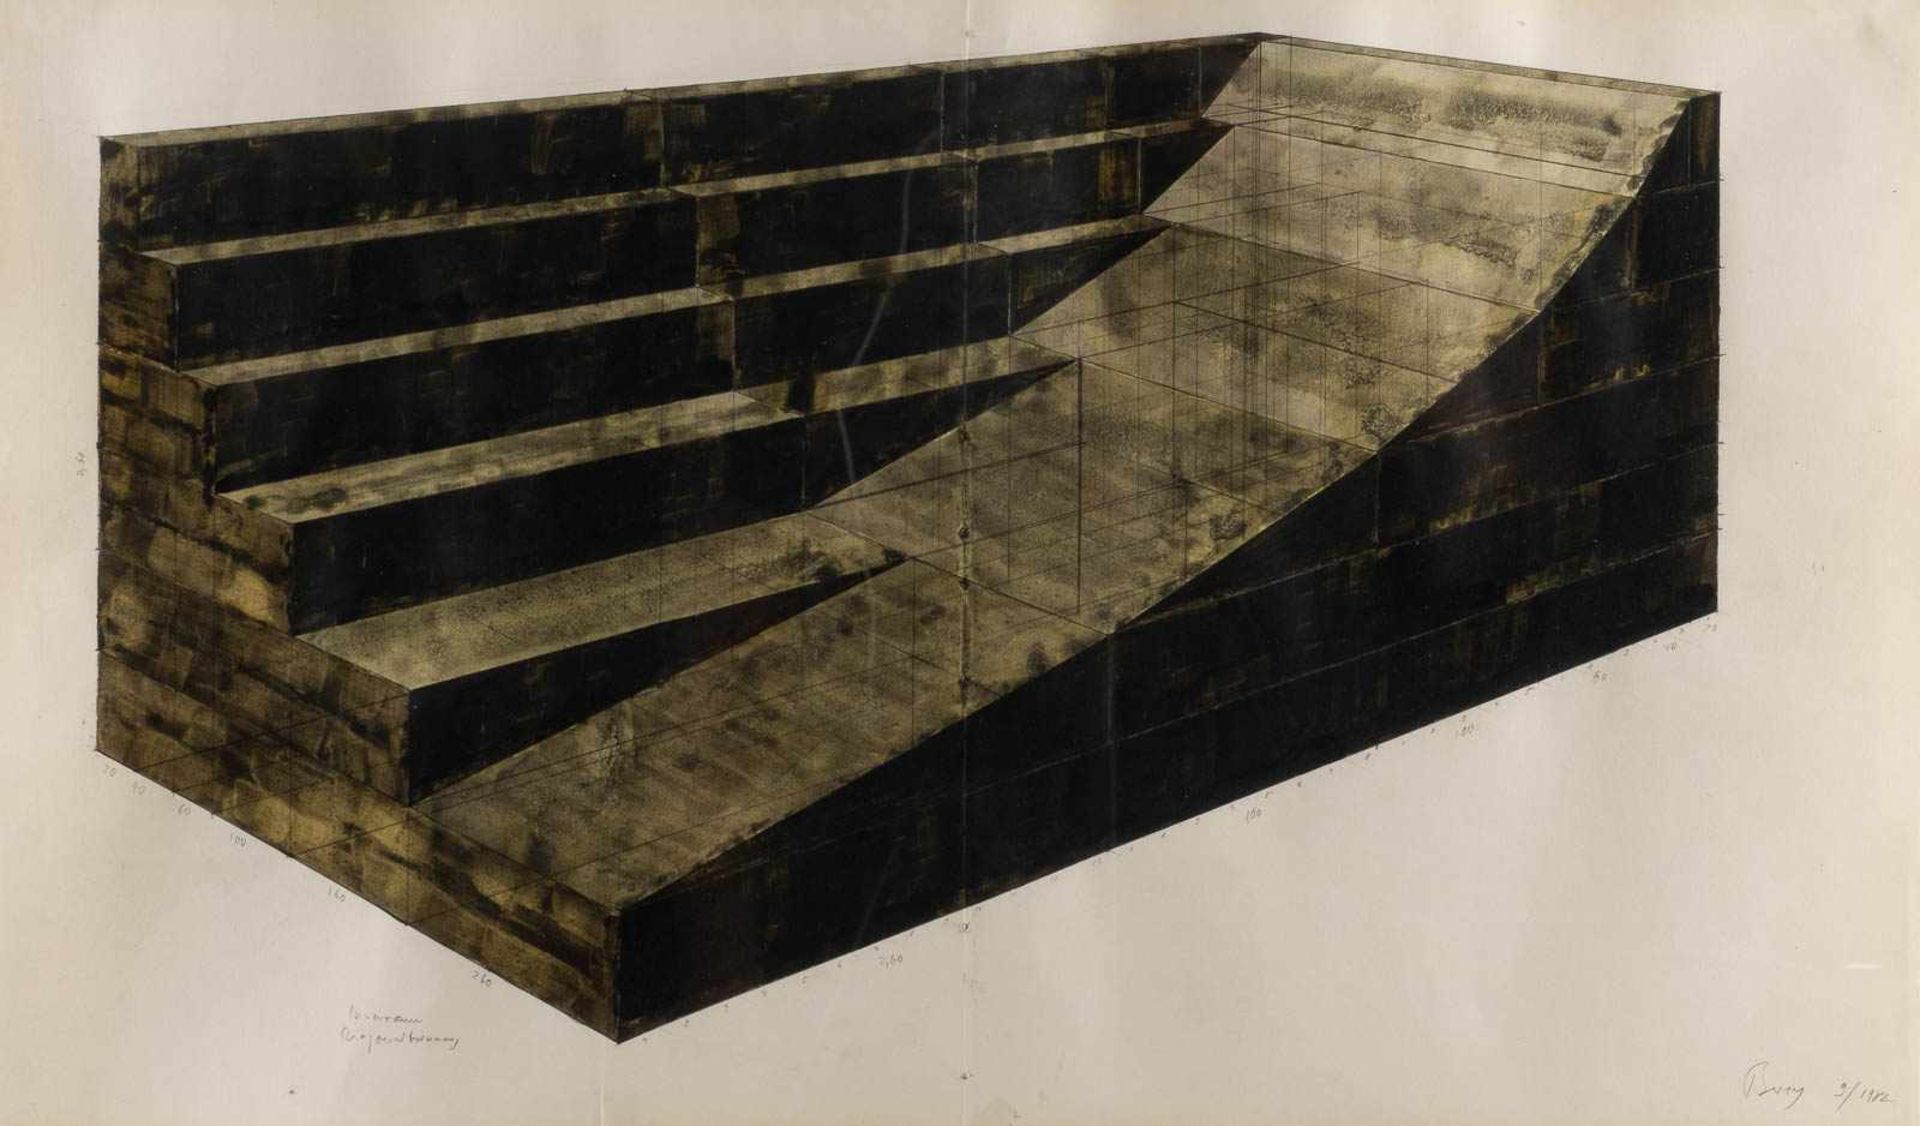 CLAUS BURY1946 Gelnhausen 'INNER ROOM - DIAGONAL SEPERATION' (9/1982) Mixed-media (coloured pencil